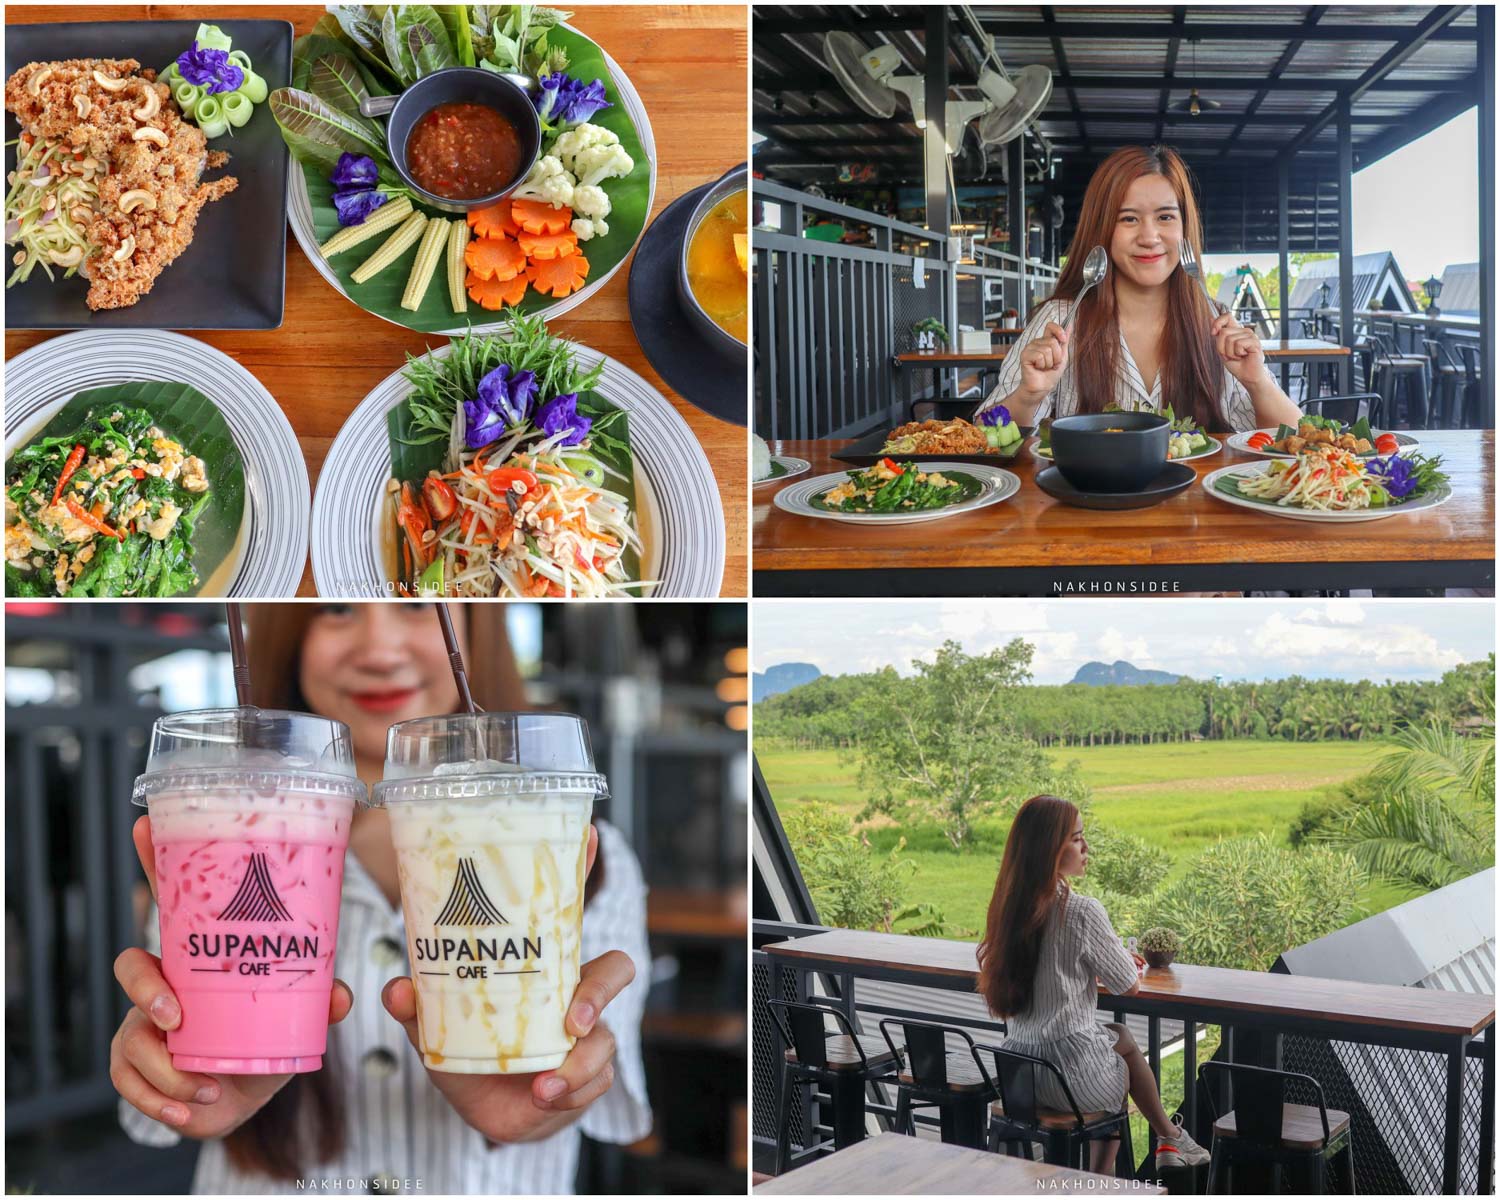 2.-Supanan-Cafe -จัดได้ว่าเด็ดเป็นคาเฟ่เปิดใหม่ล่าสุด-2020-พัทลุง-อาหารอร่อย-วิวดีย์-น้ำพริกเด็ดมวากก-เป็นทั้งร้านอาหารและคาเฟ่ครับ ที่เที่ยว,ที่พัก,พัทลุง,การท่องเที่ยว,ประเทศไทย,วิถีชีวิต,ชุมชน,ดริฟท์กาแฟ